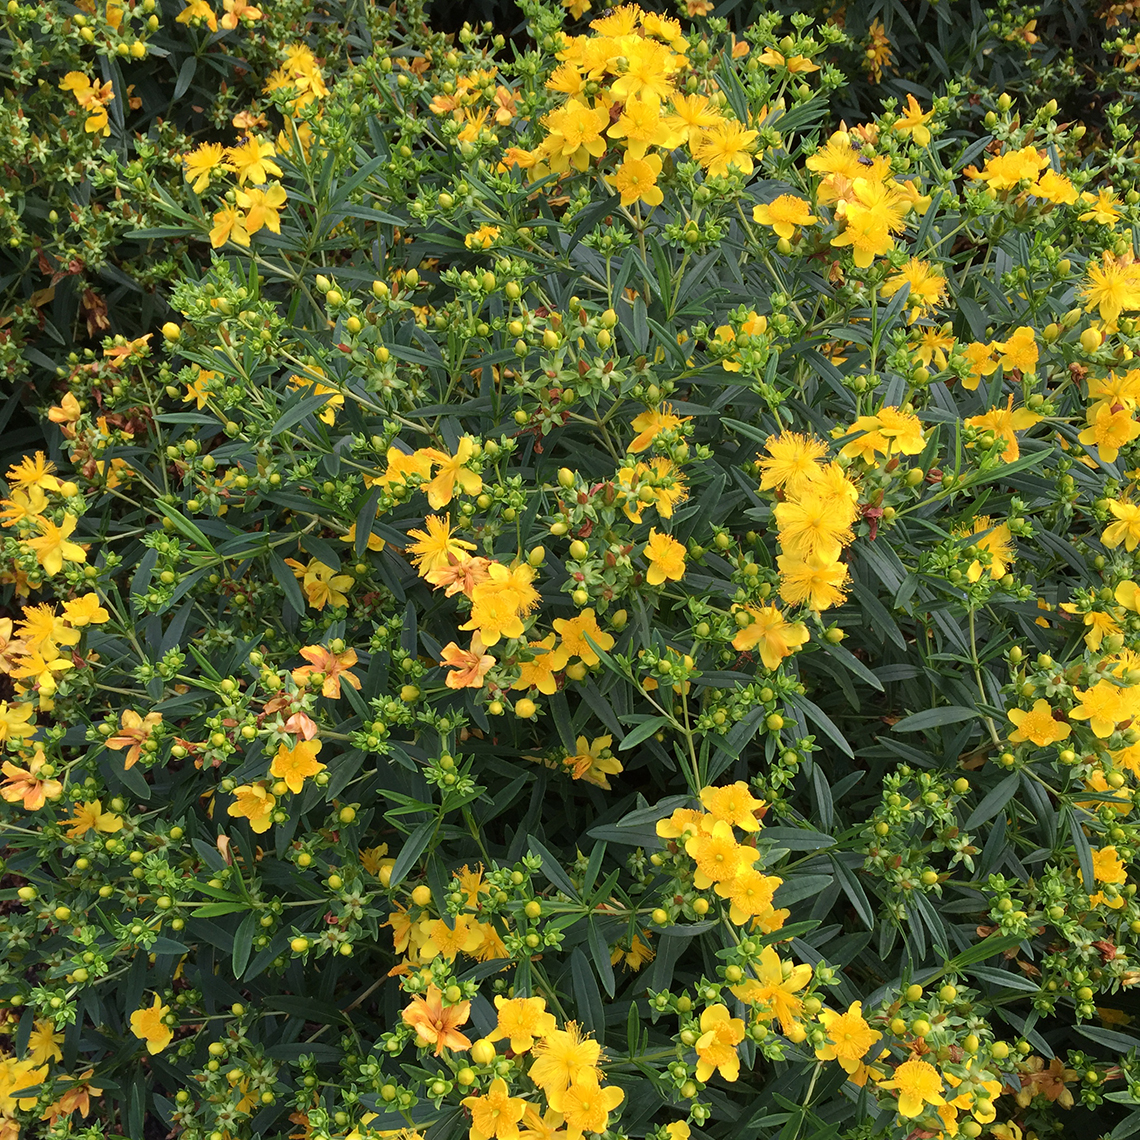 The yellow sunburst flowers of Sunny Boulevard hypericum